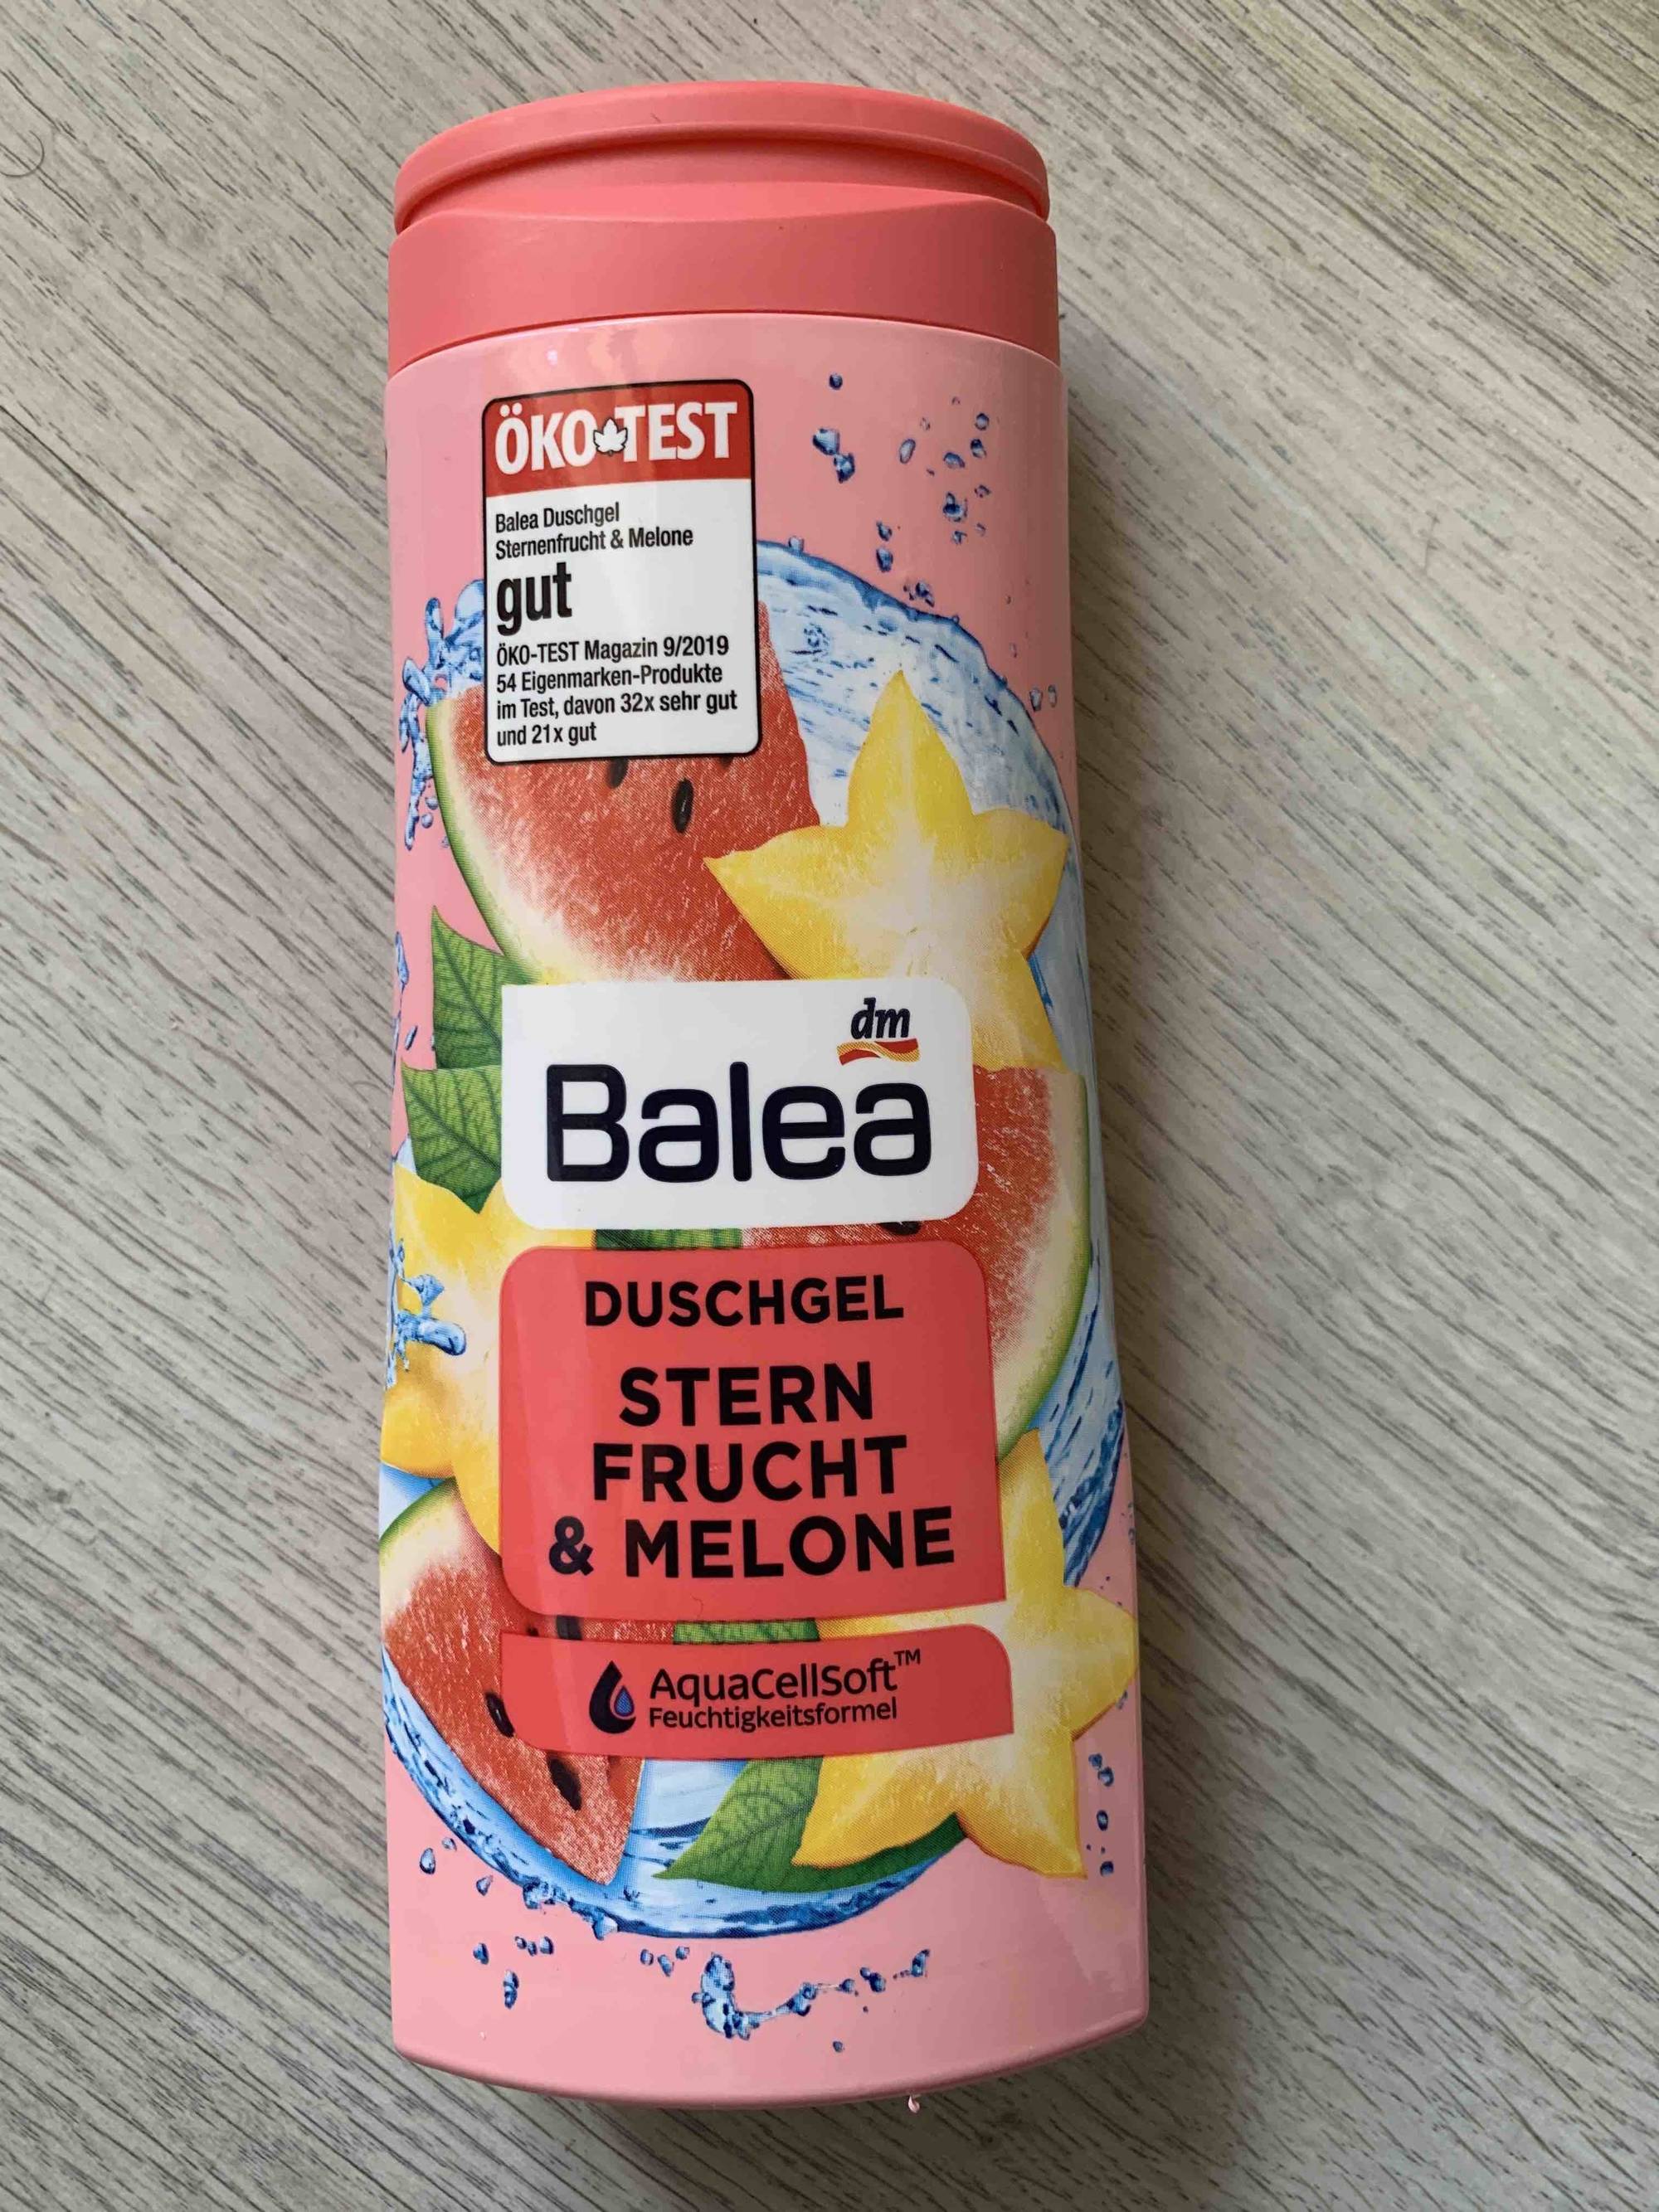 BALEA - Duschgel stern frucht & melone